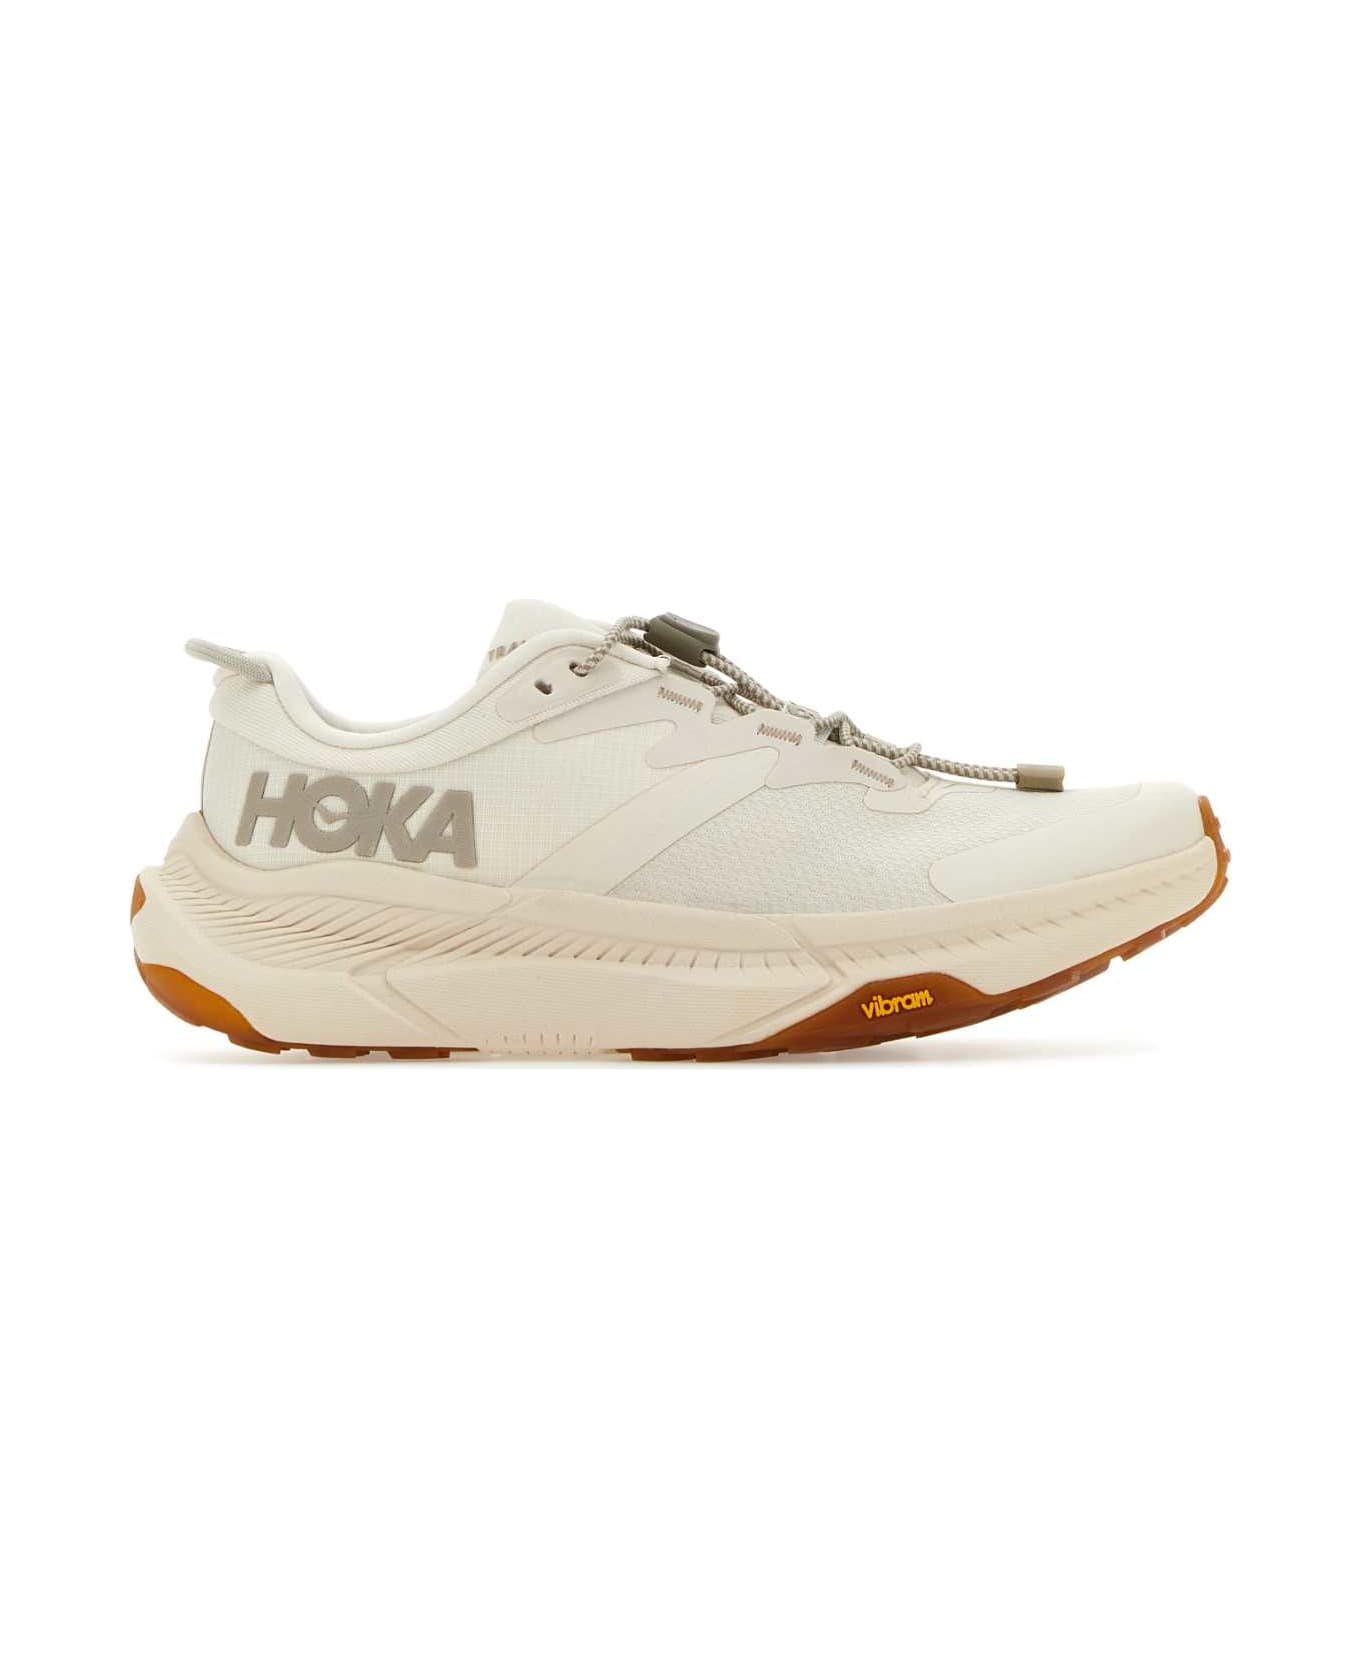 Hoka Ivory Fabric W Transport Sneakers - EGGNOGEGGNOG スニーカー